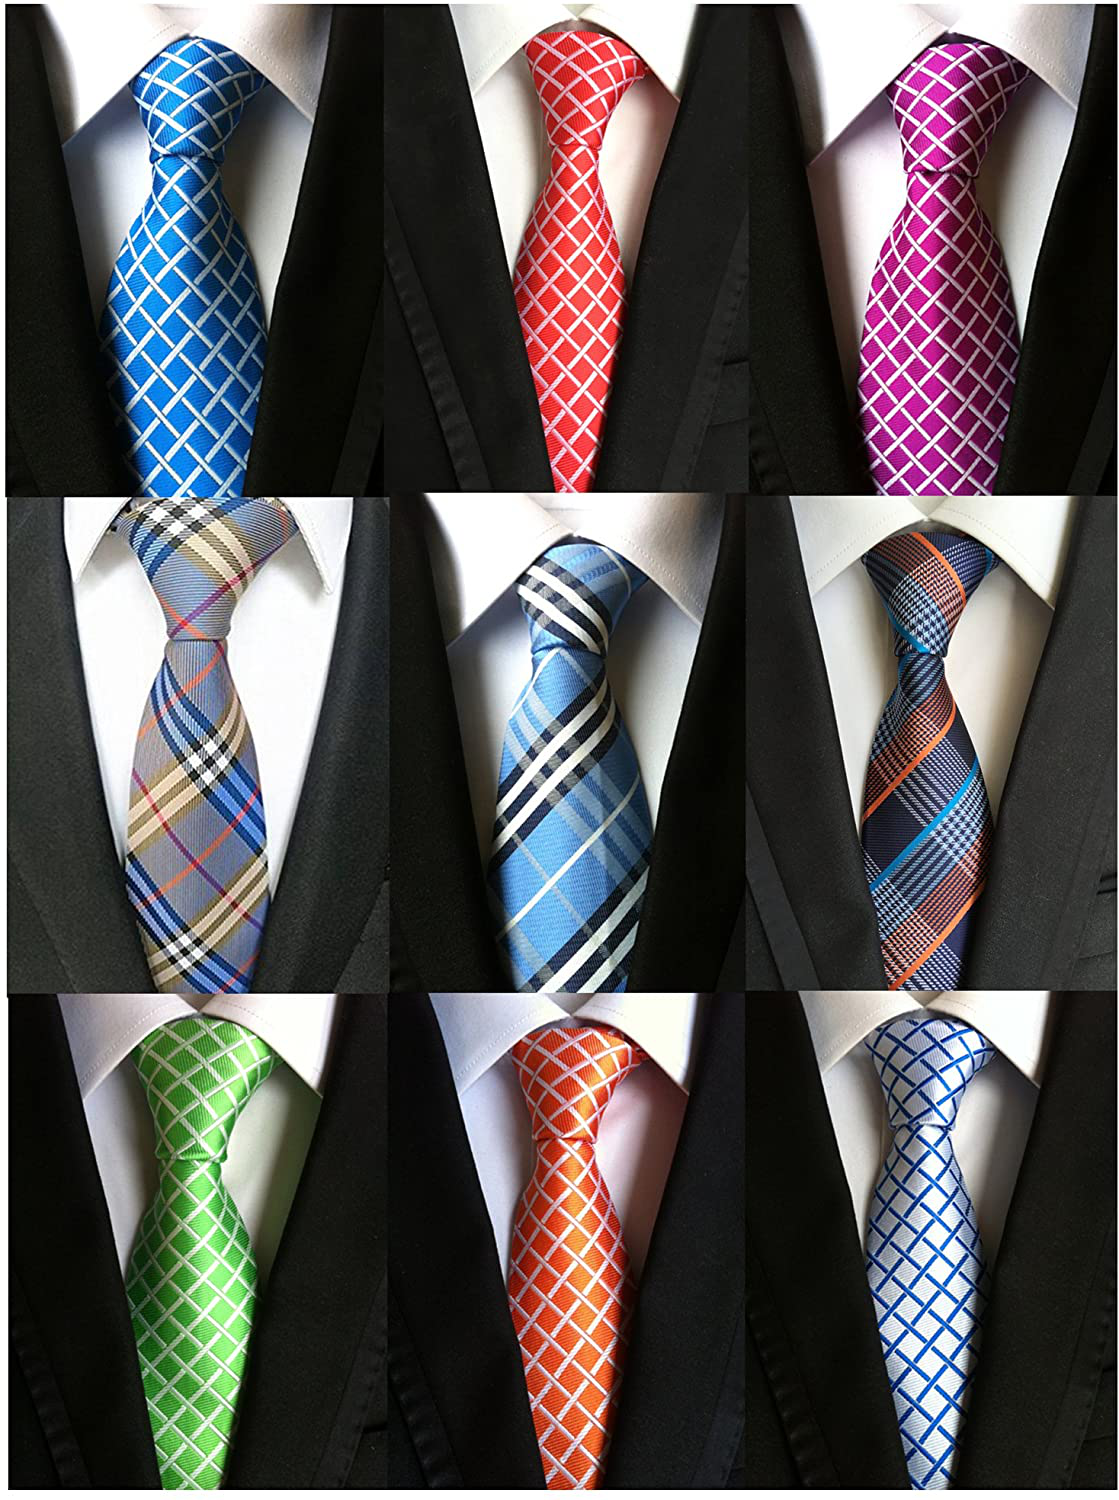 Sucio rastro salvar set de corbatas para hombre varon 9 PCS de seda clasicas | eBay